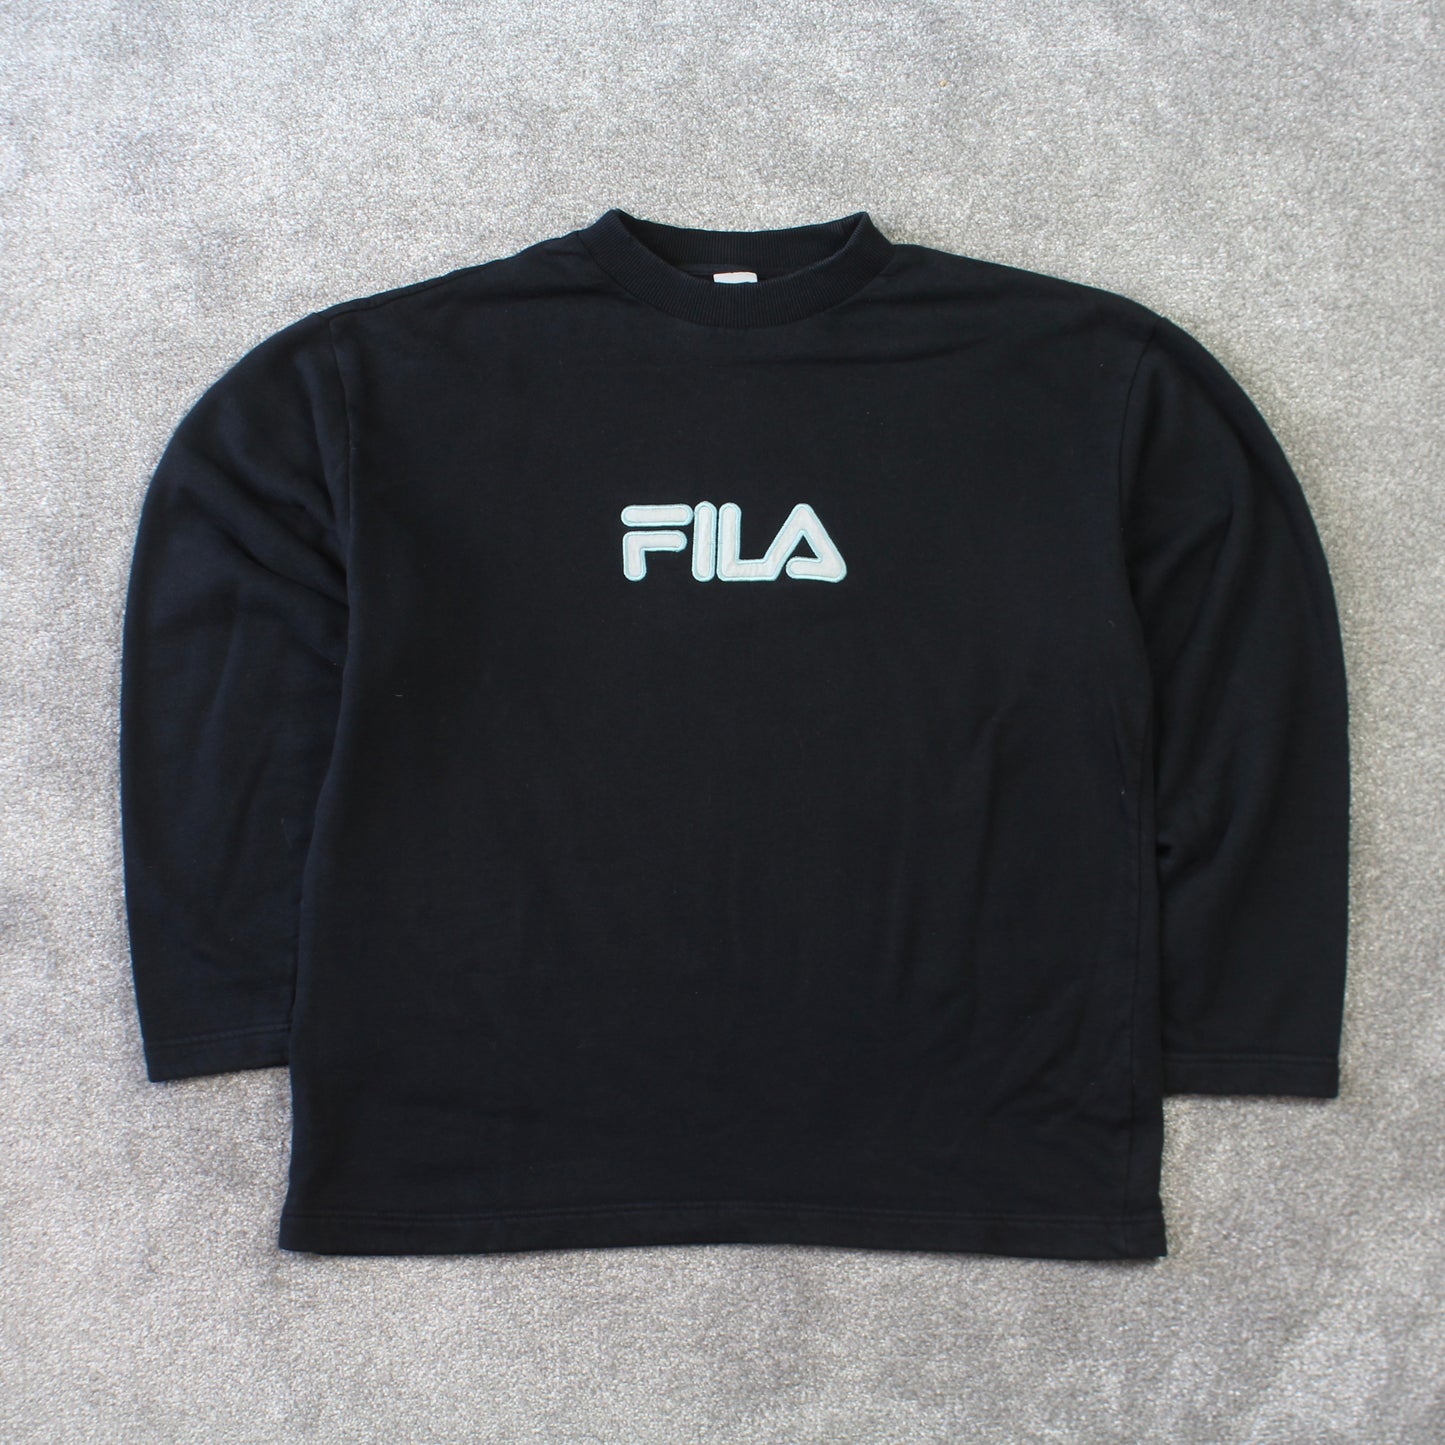 Vintage 1990s Fila Sweatshirt Black - (M)